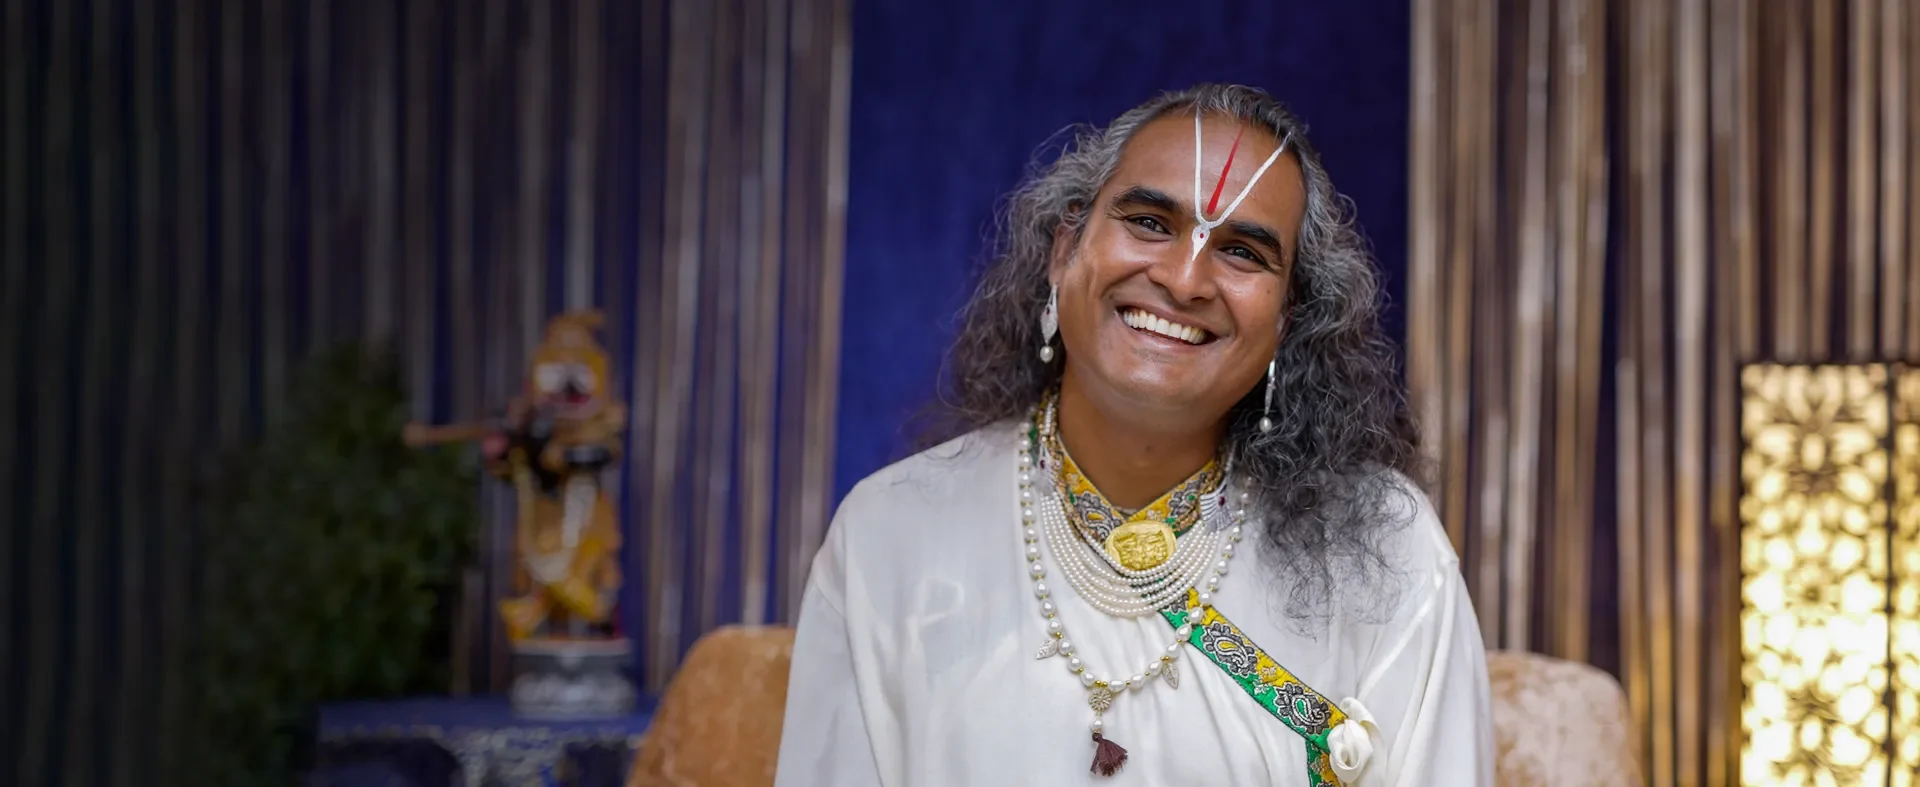 paramahamsa vishwananda, founder of bhakti marga, smiling